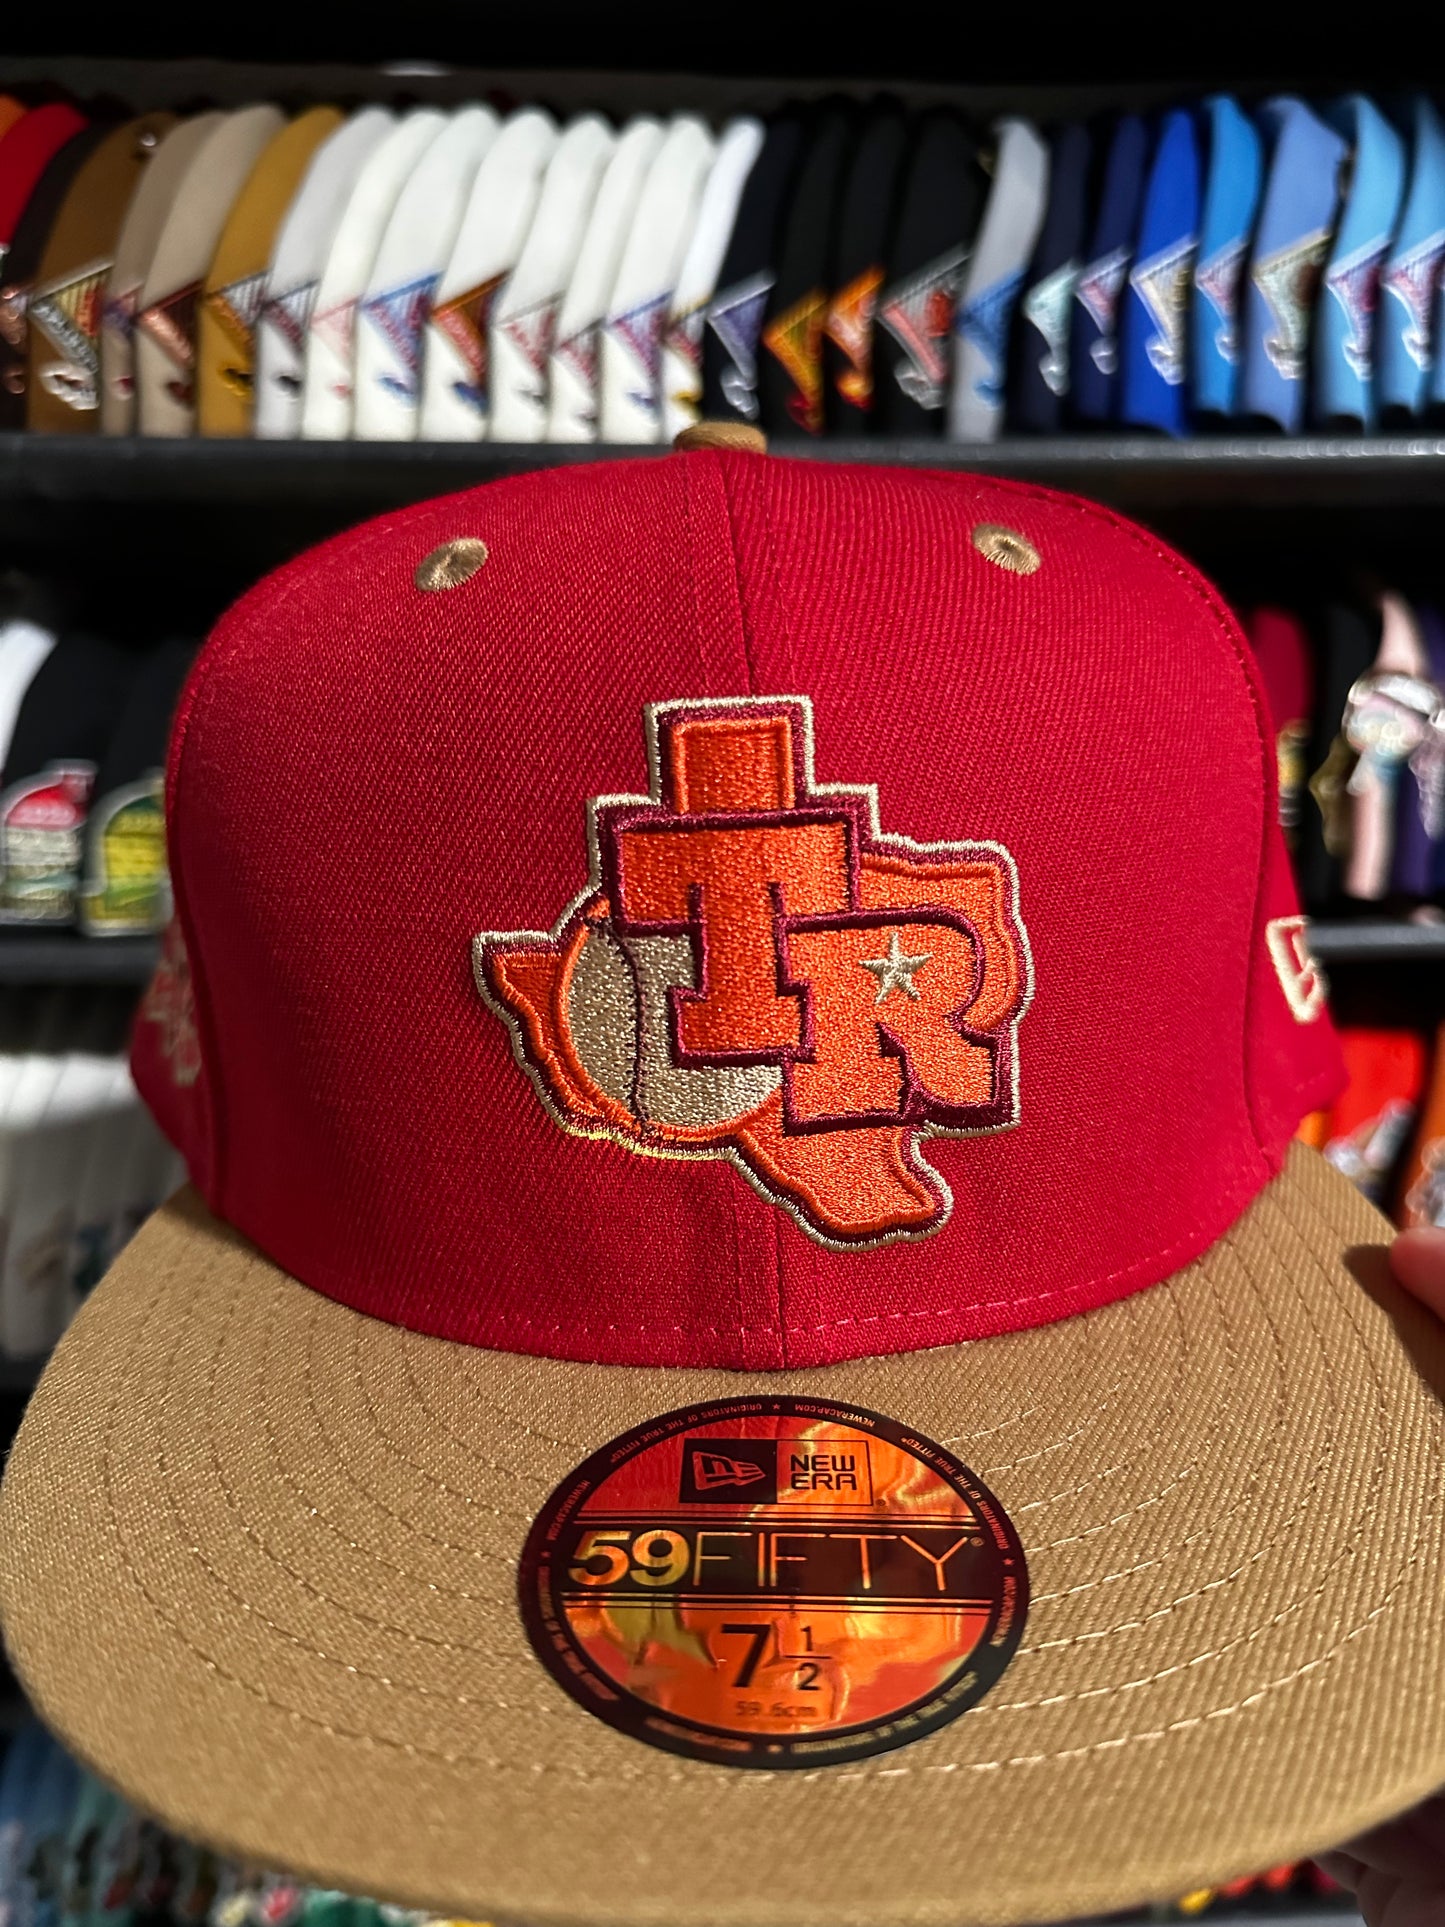 LidsHD Texas Rangers “Red Rock”